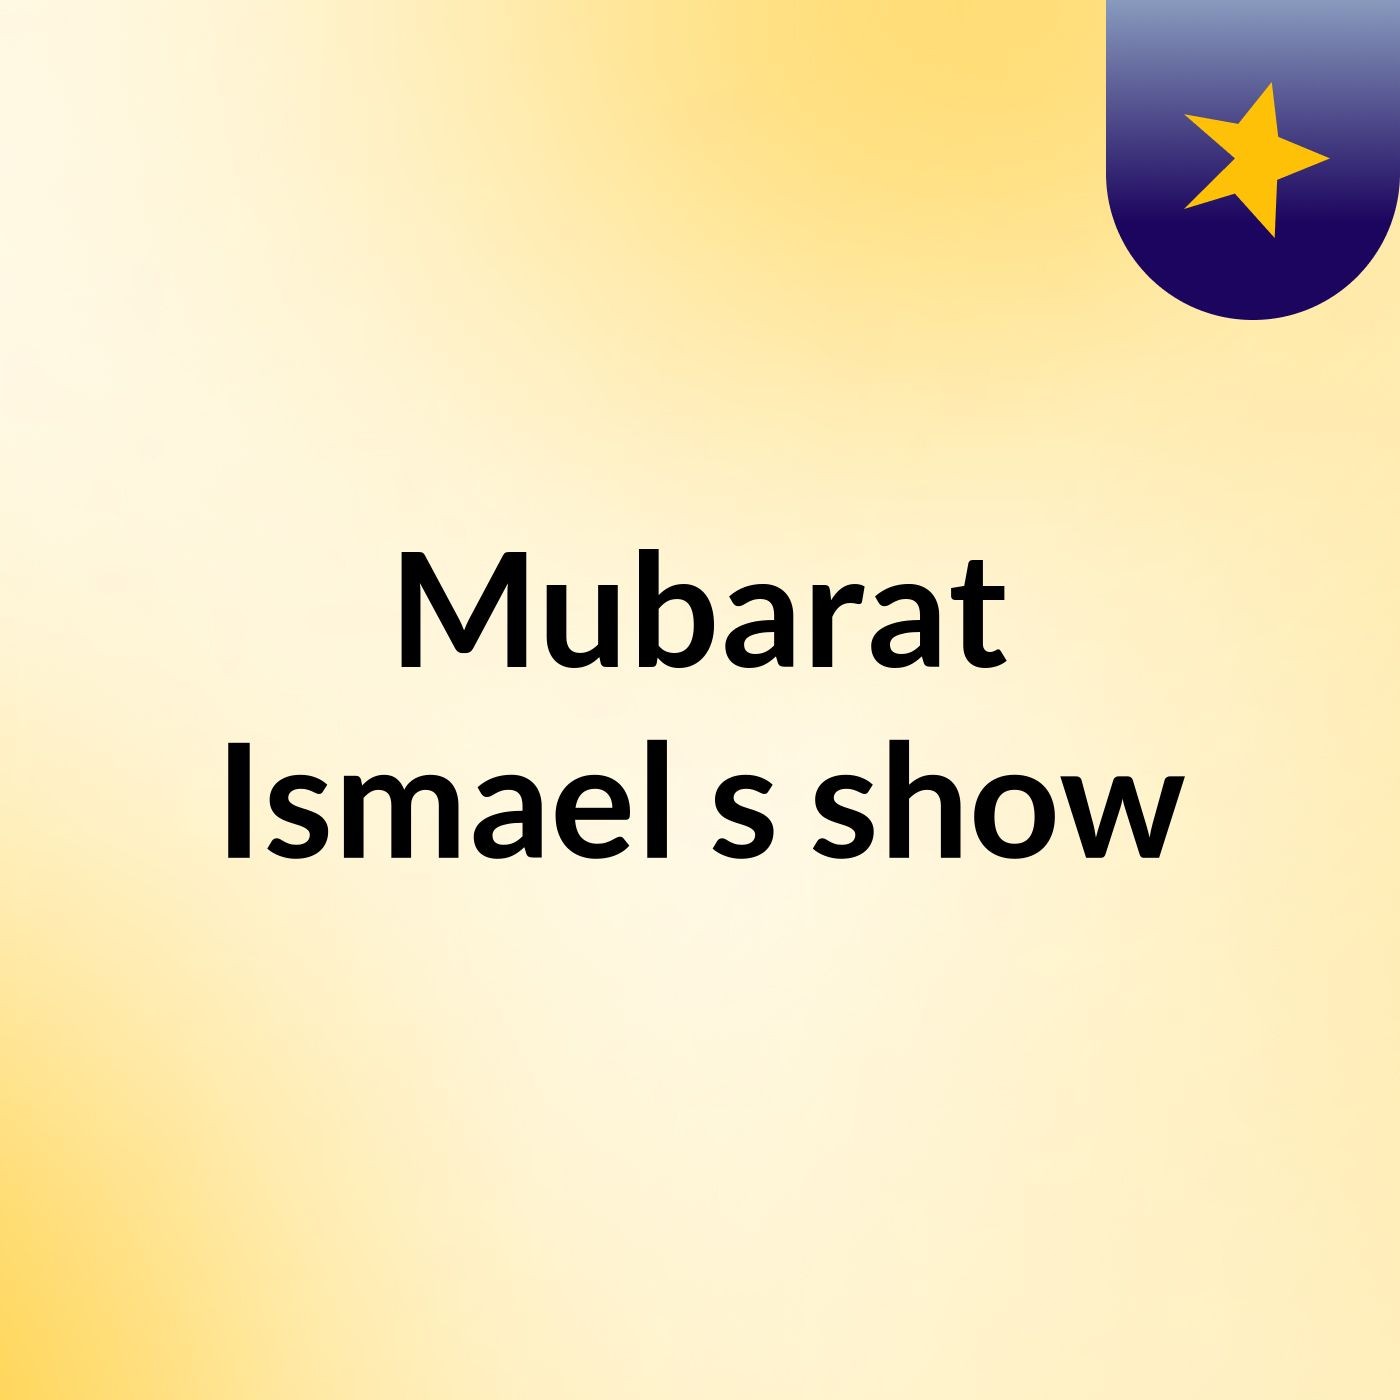 Mubarat Ismael's show